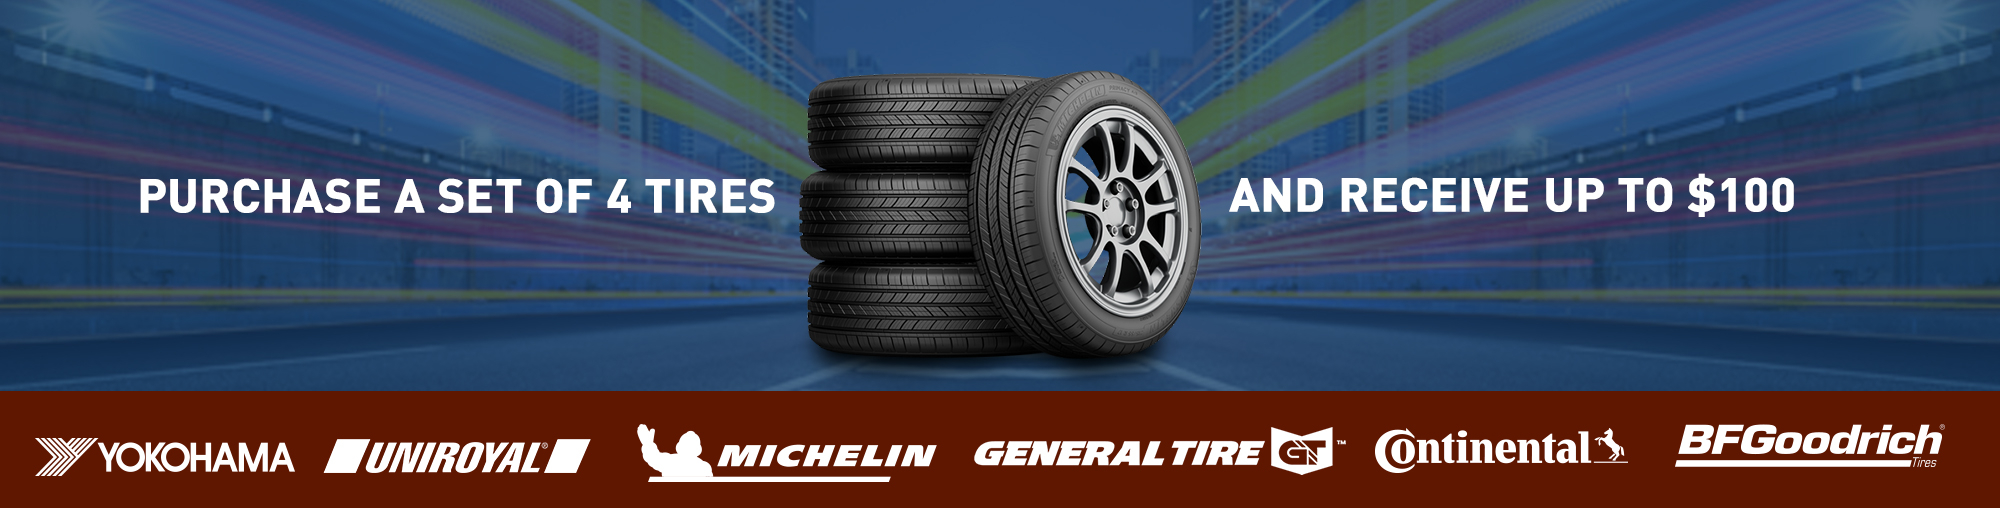 Michelin Tire Rebate Program